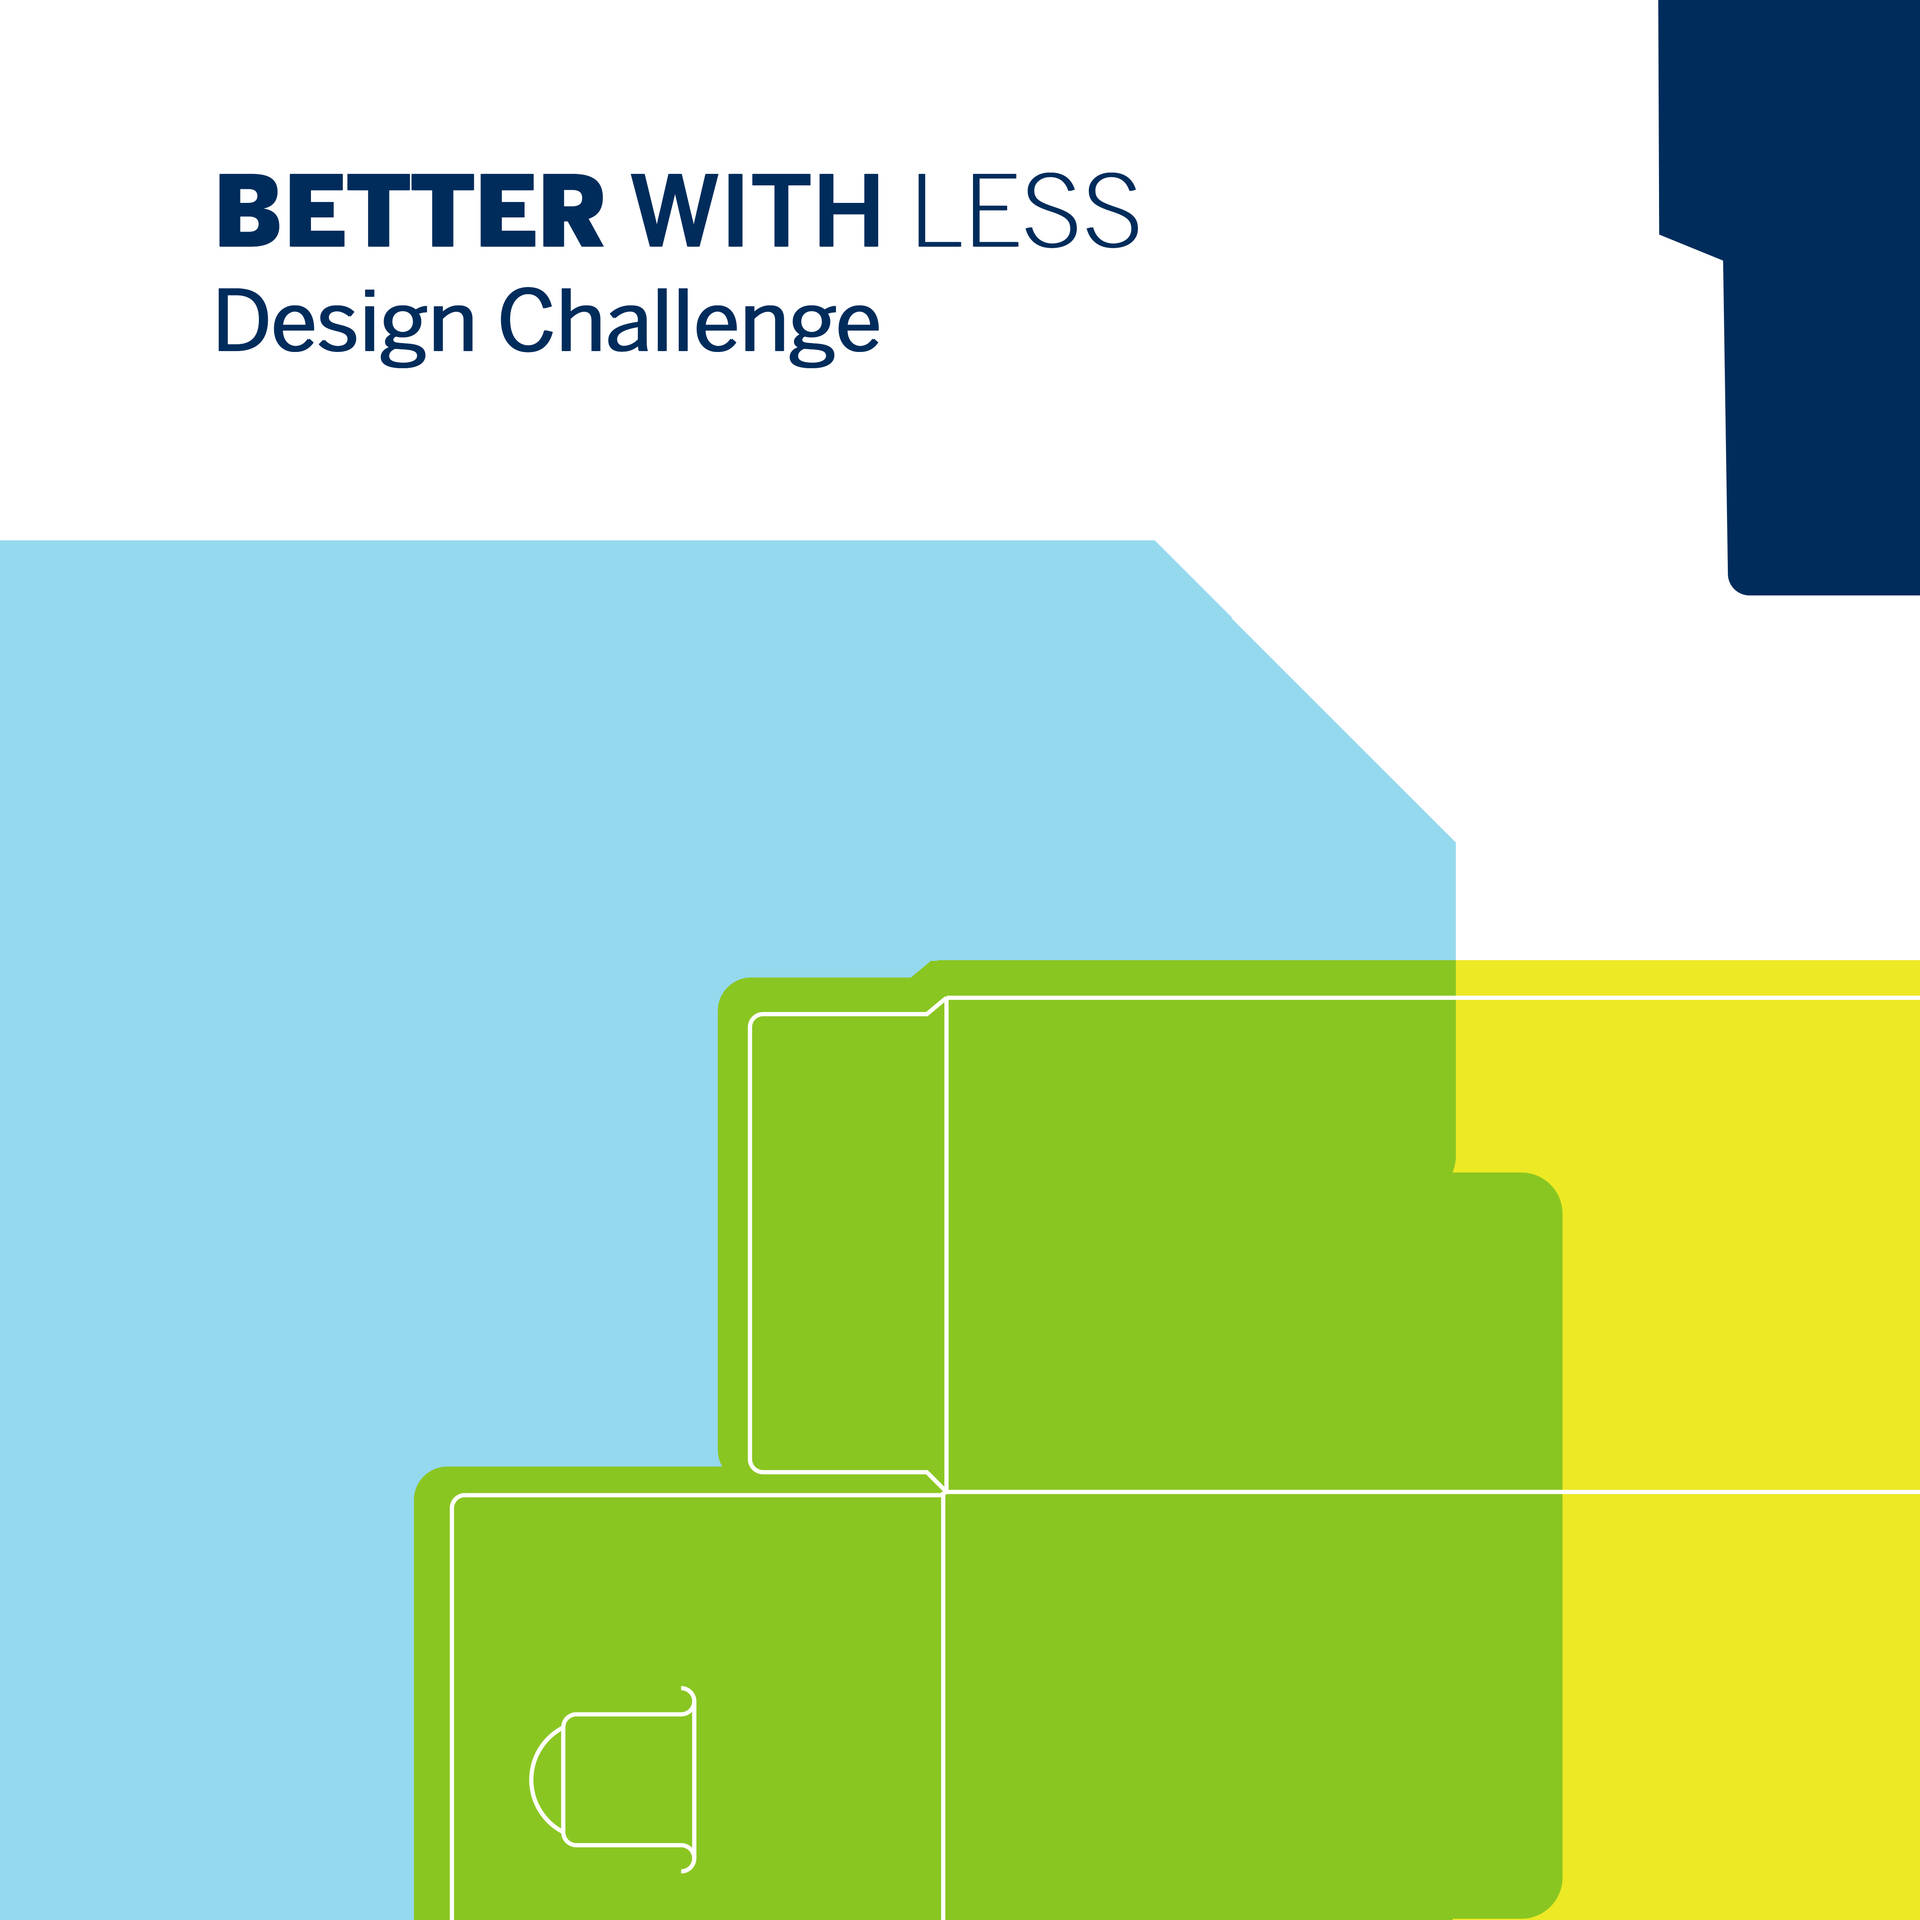 Less design. Design Challenge. Better Design. Better with less. Better with less упаковки.